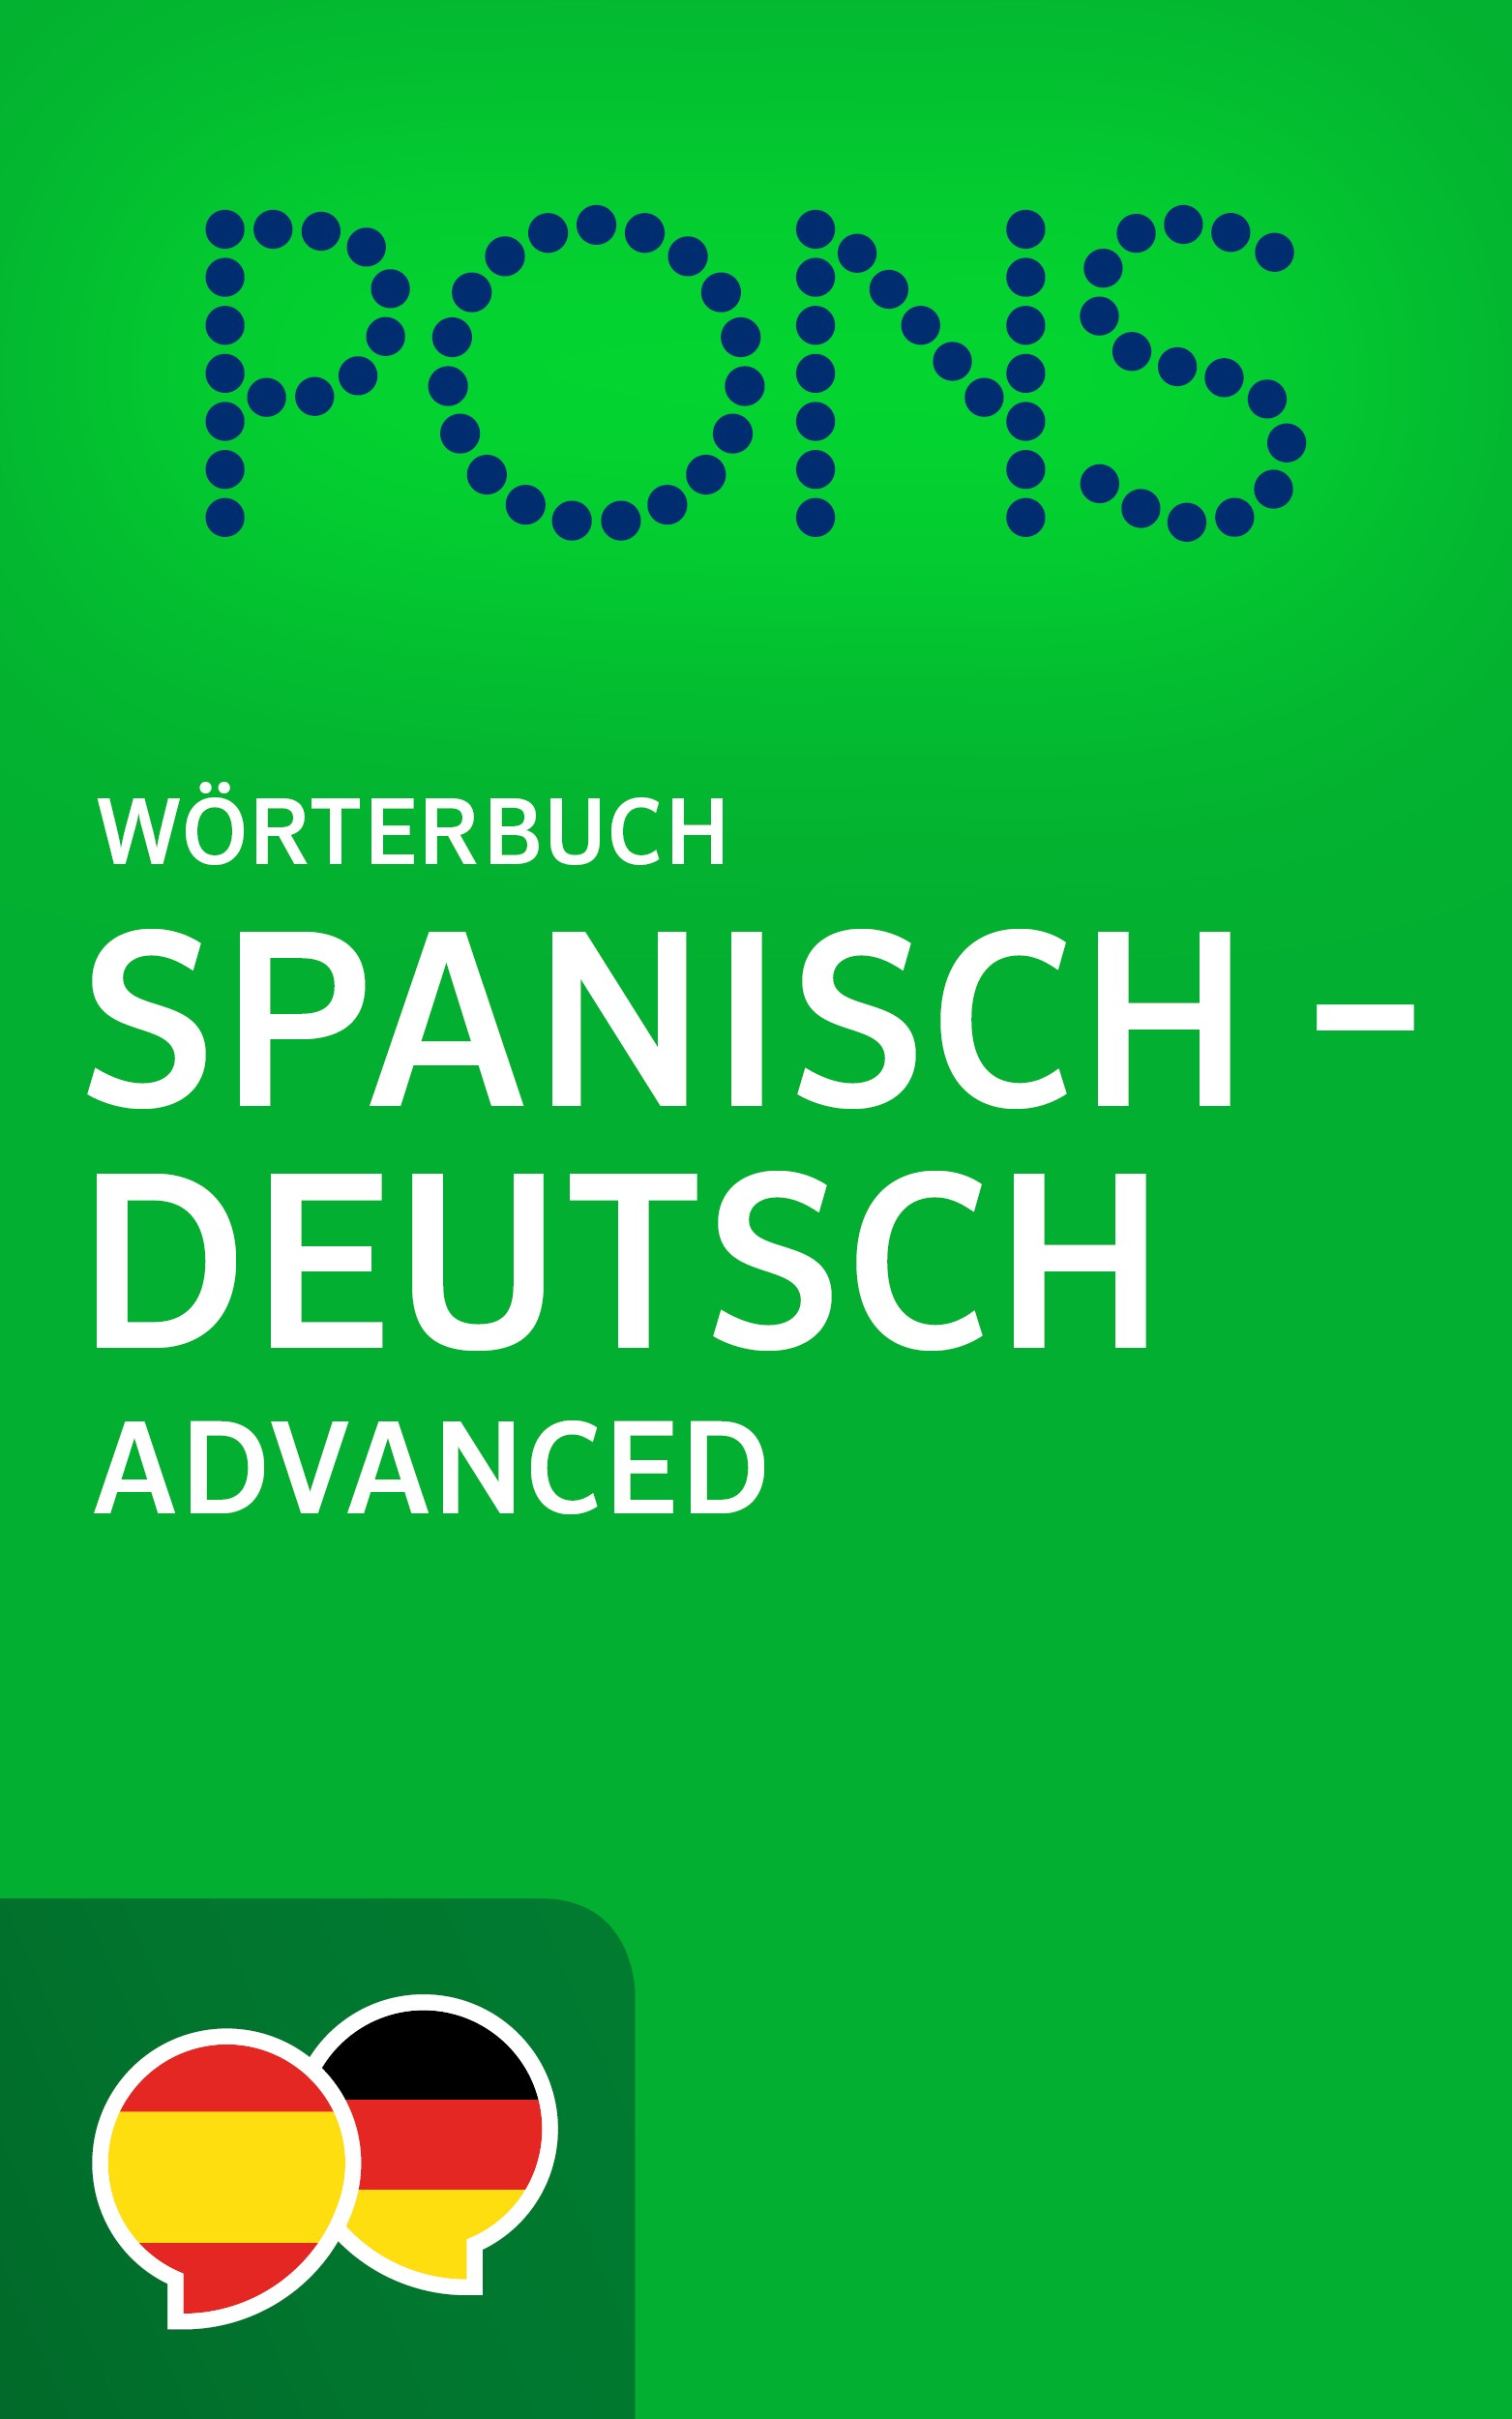 E-Book: PONS Wörterbuch Spanisch -> Deutsch Advanced